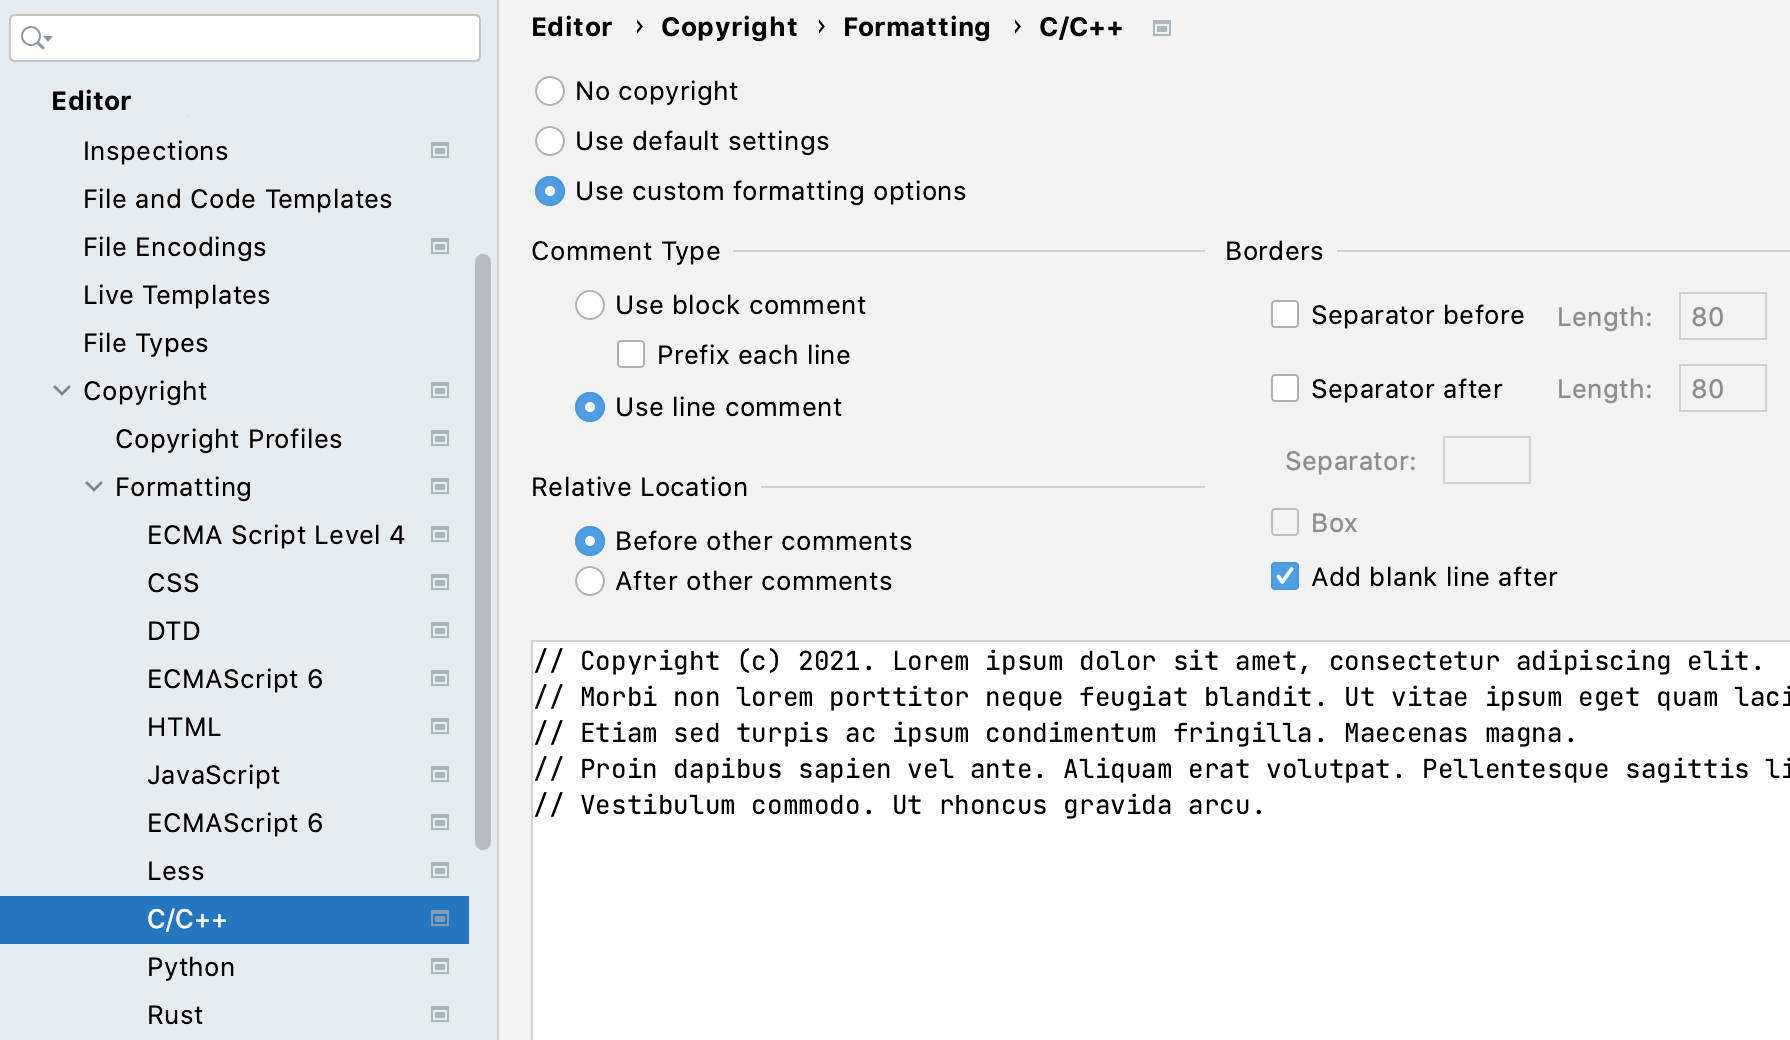 Copyright formatting settings for C/C++